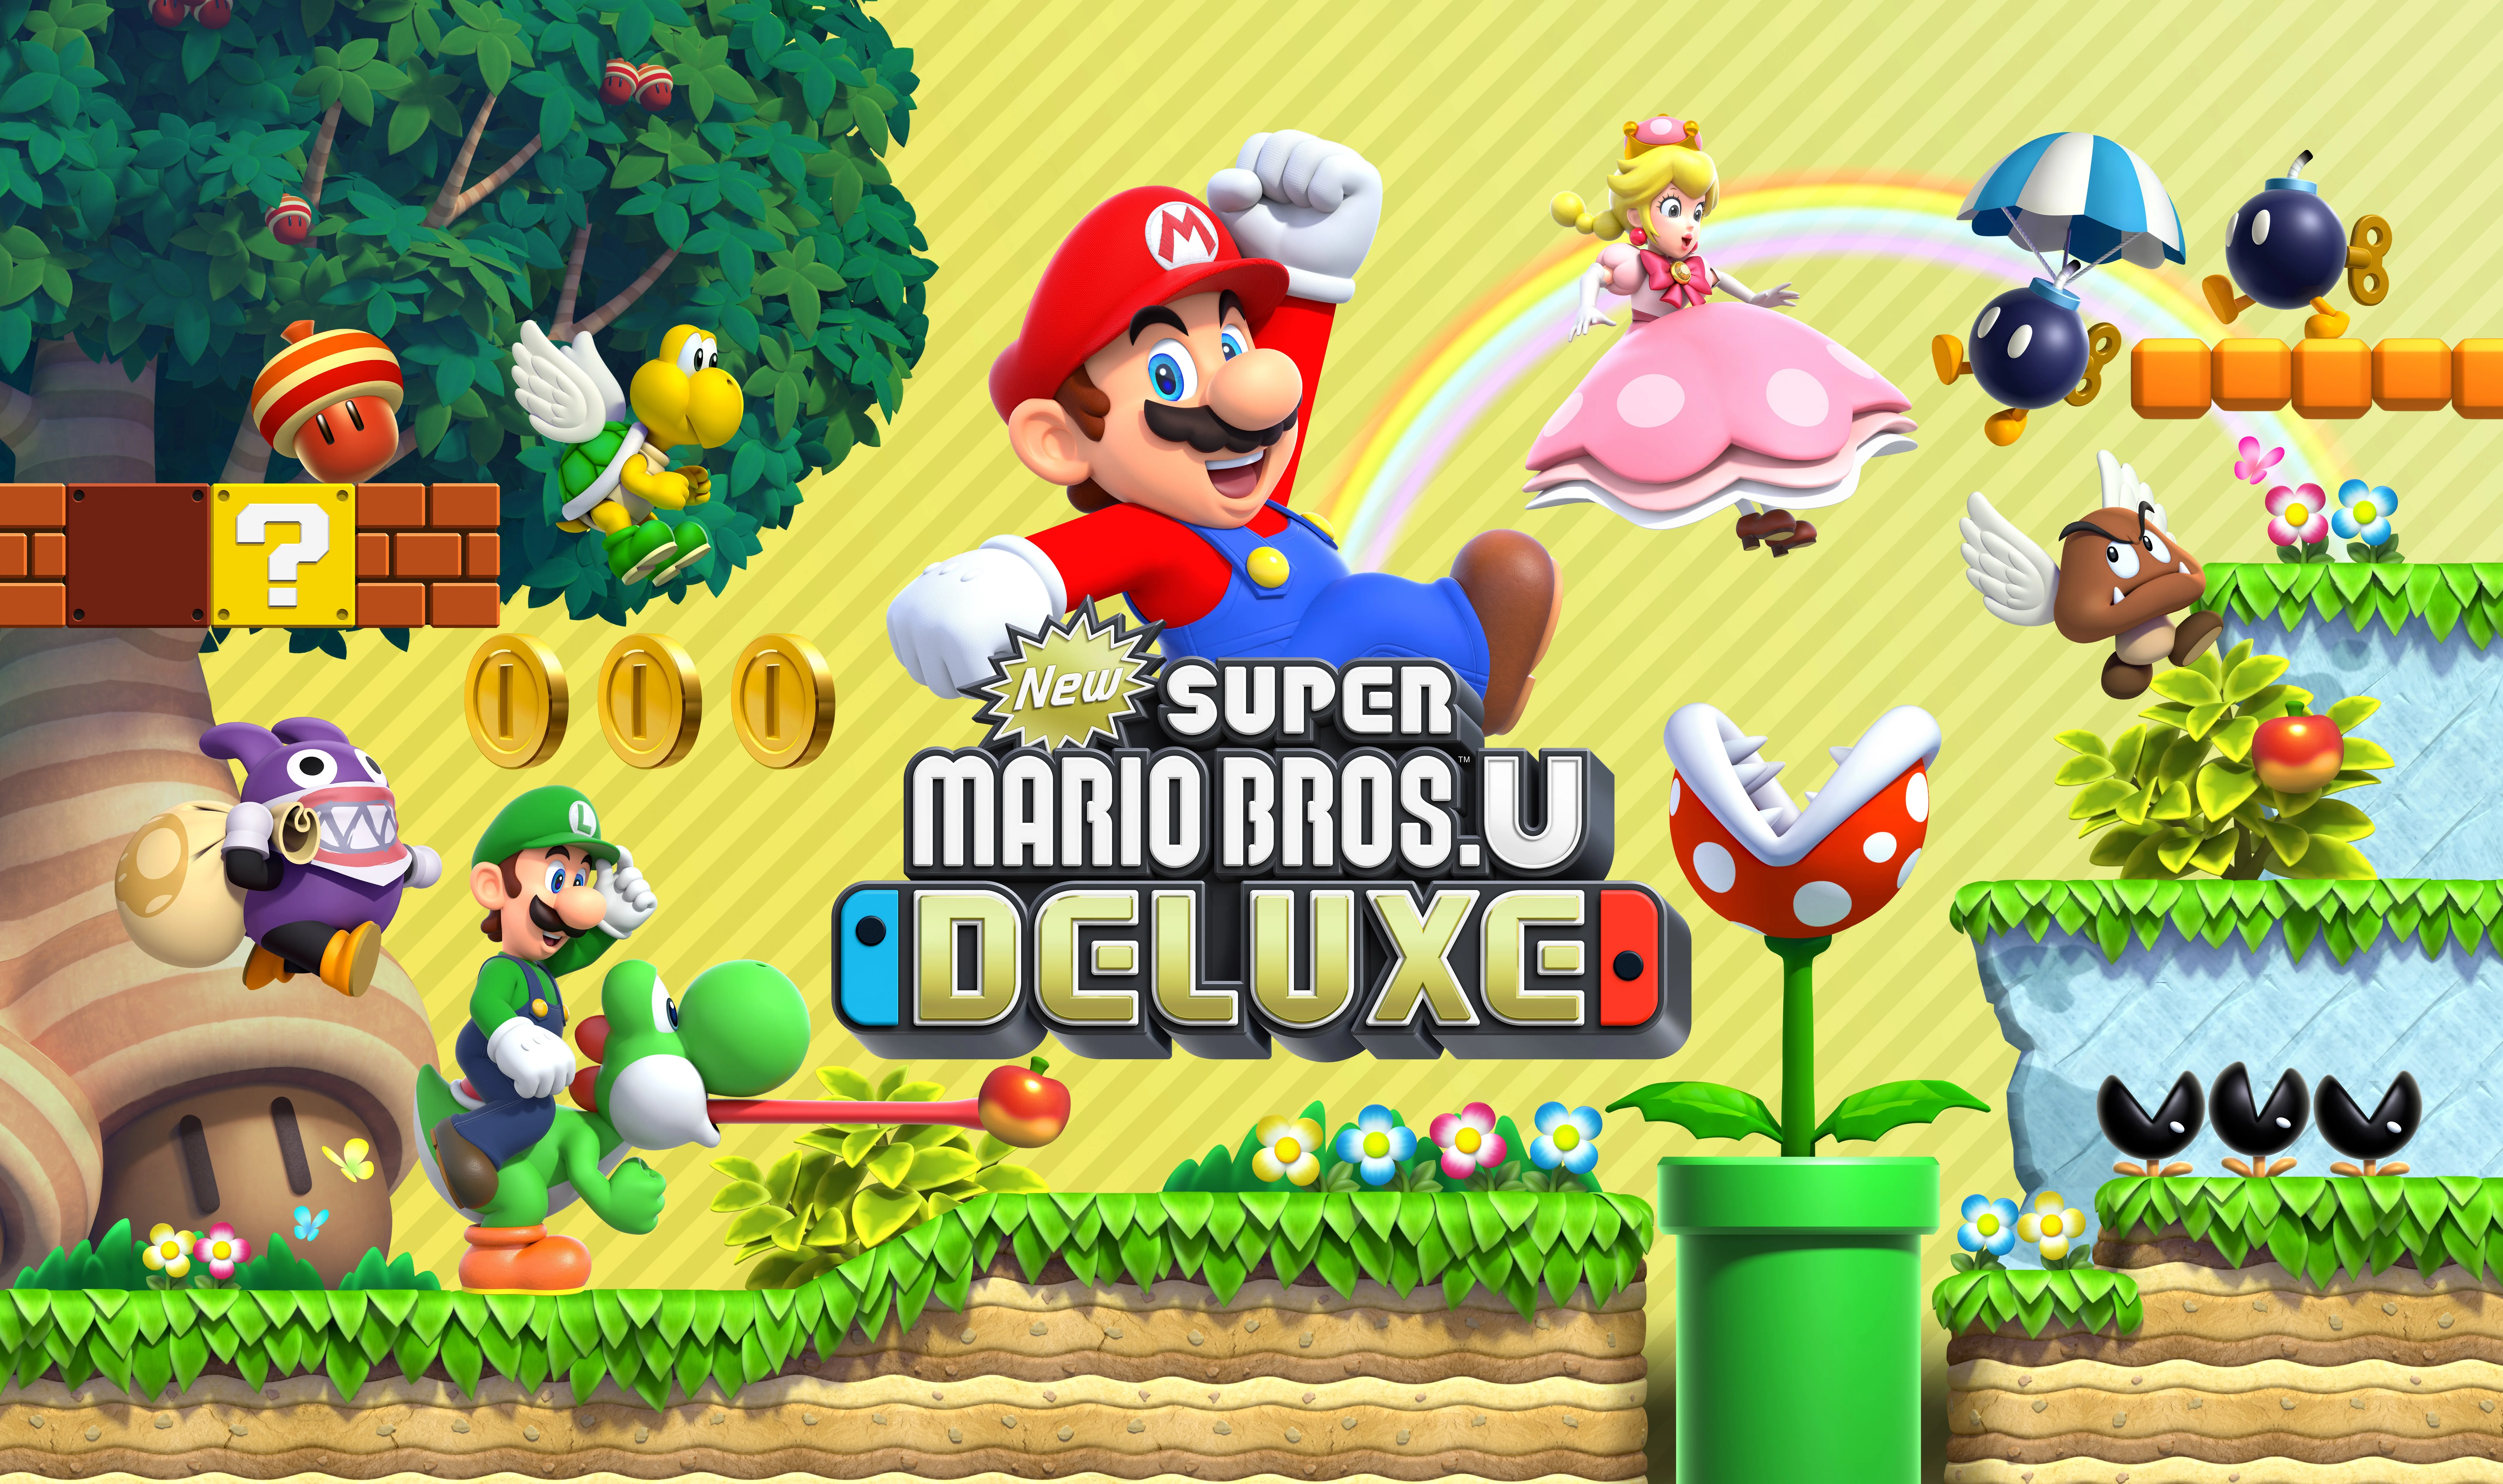 Mario deluxe nintendo switch. New super Mario Bros u Deluxe Nintendo Switch. Игра New super Mario Bros. U Deluxe. New super Mario Bros. U Deluxe для Nintendo Switch обложка. Игры super Mario Bros Нинтендо.